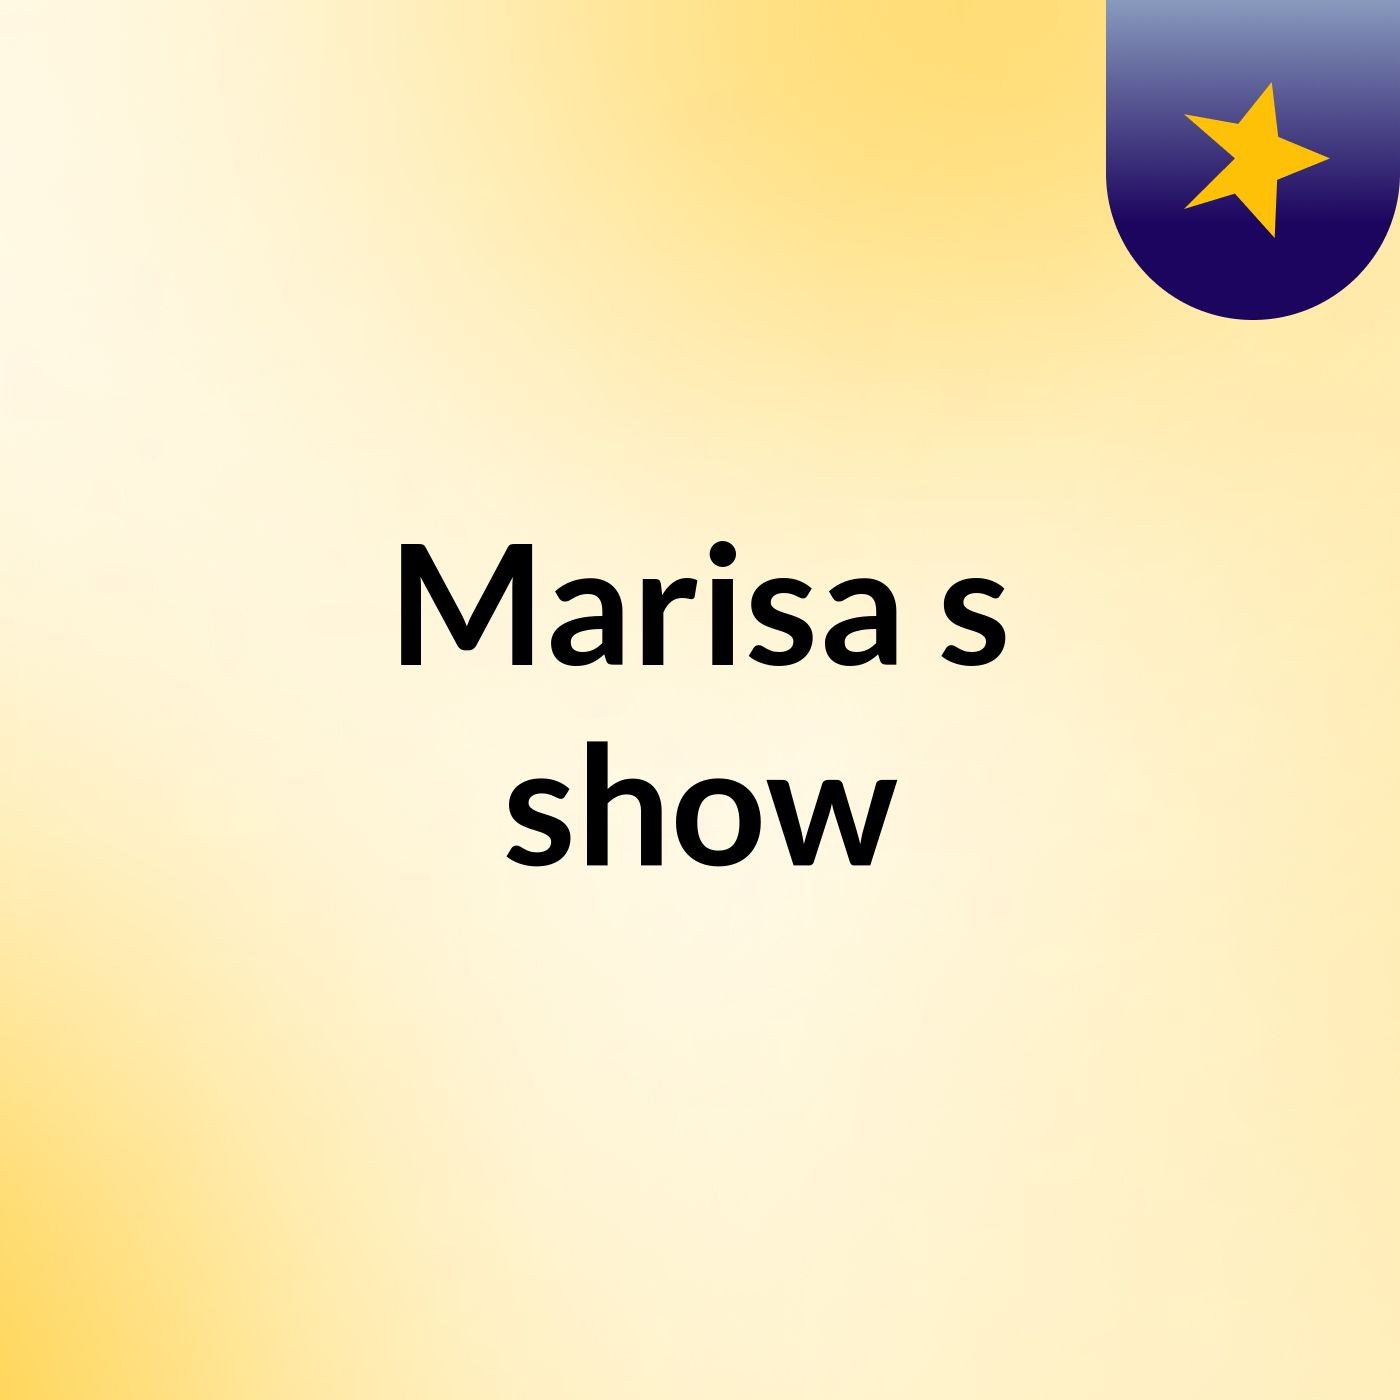 Marisa's show